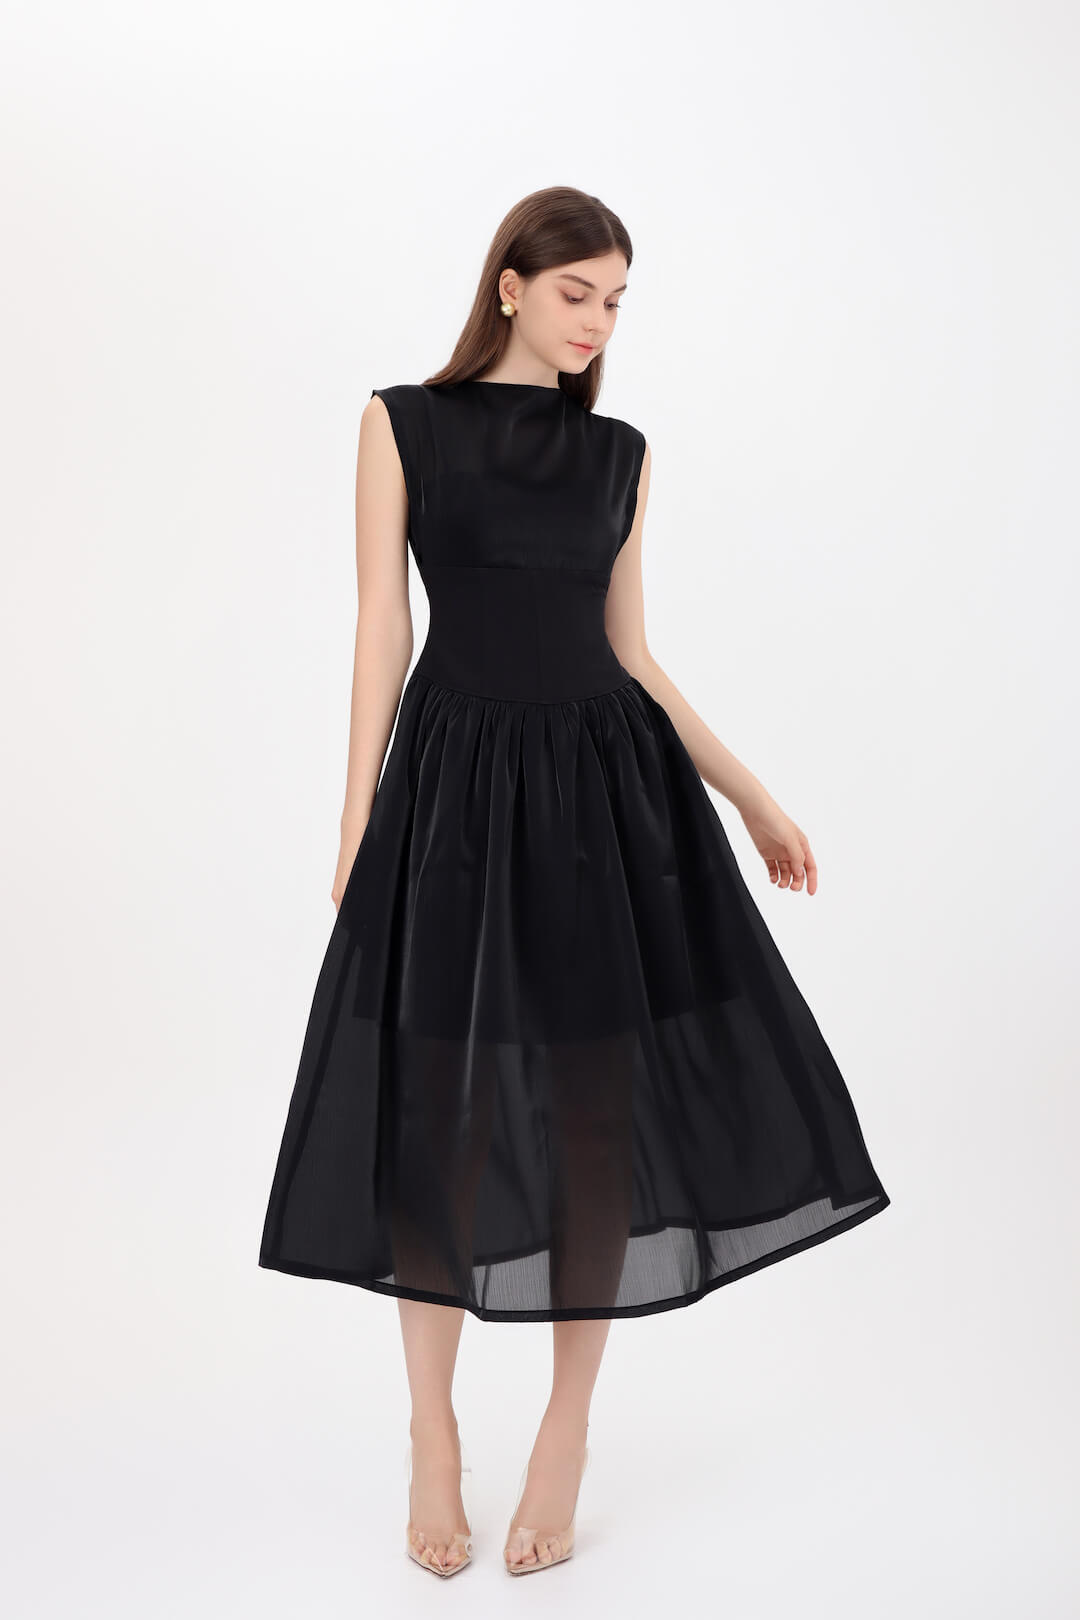 Tiffany Waist Dress in Black